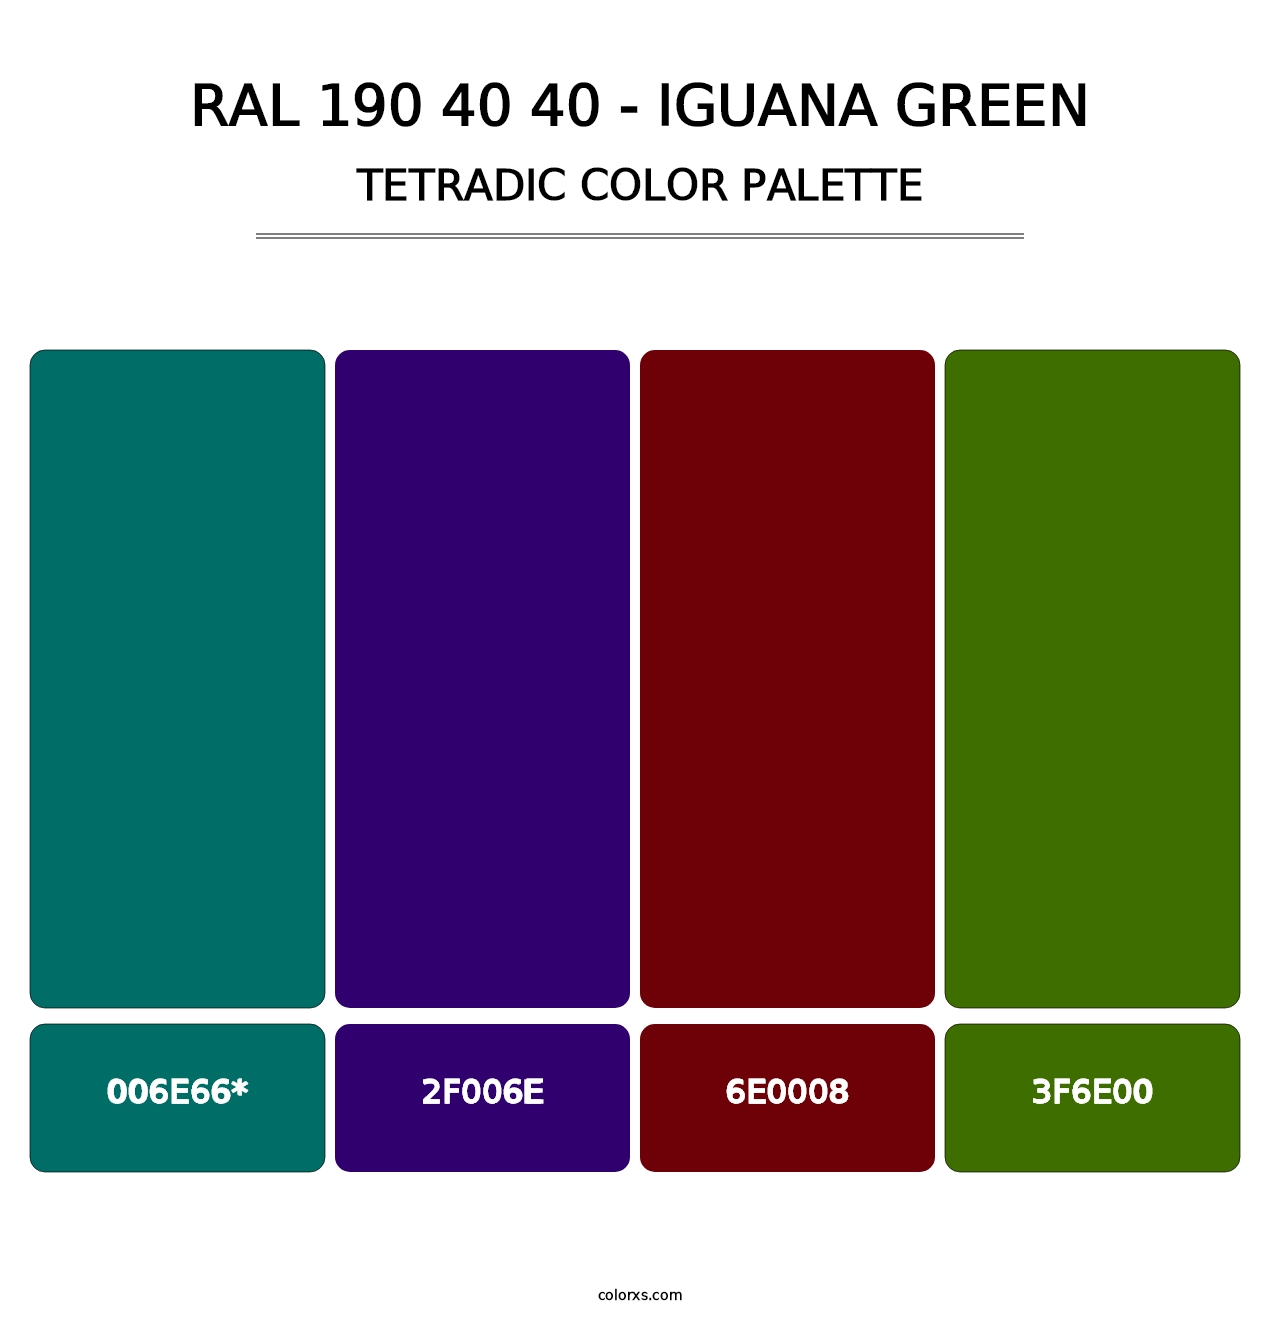 RAL 190 40 40 - Iguana Green - Tetradic Color Palette